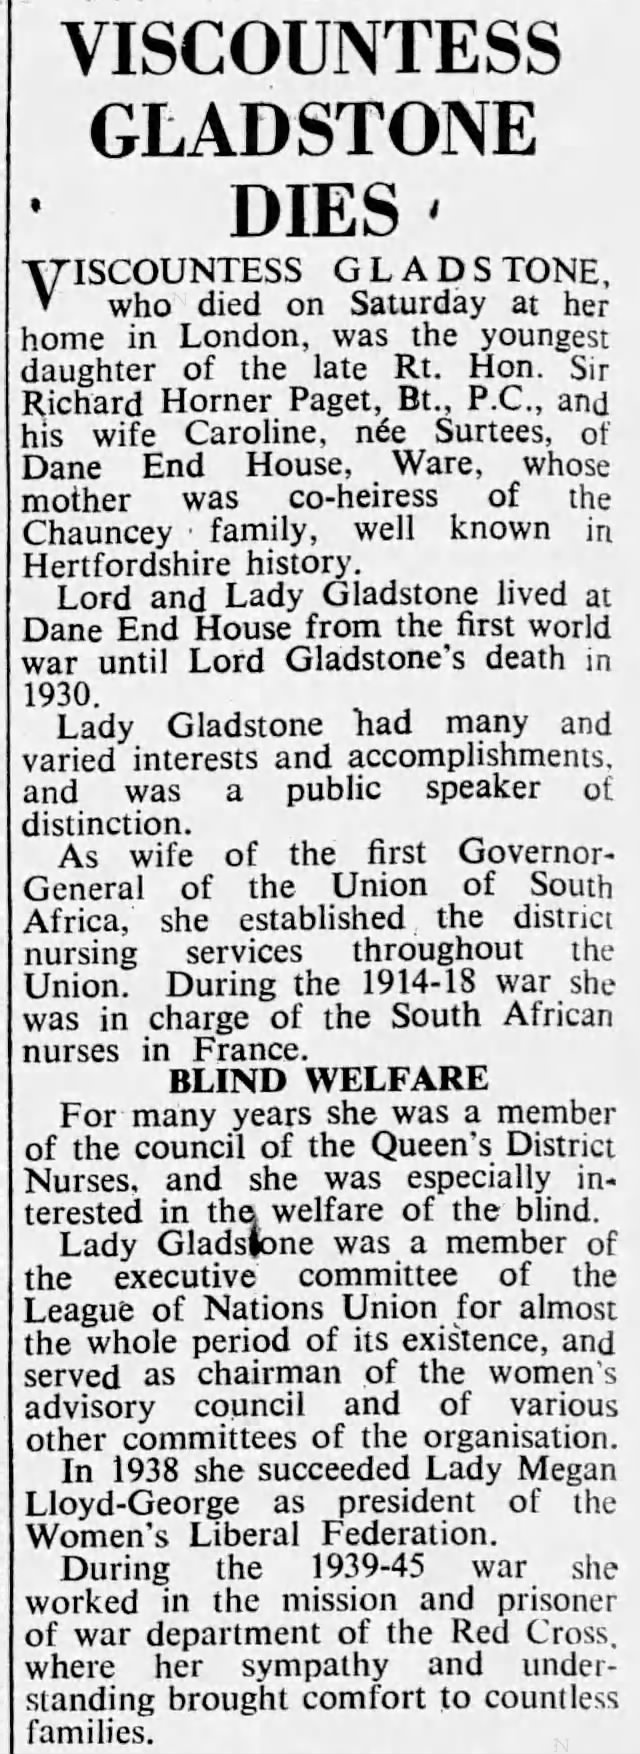 Viscountess Gladstone Dies